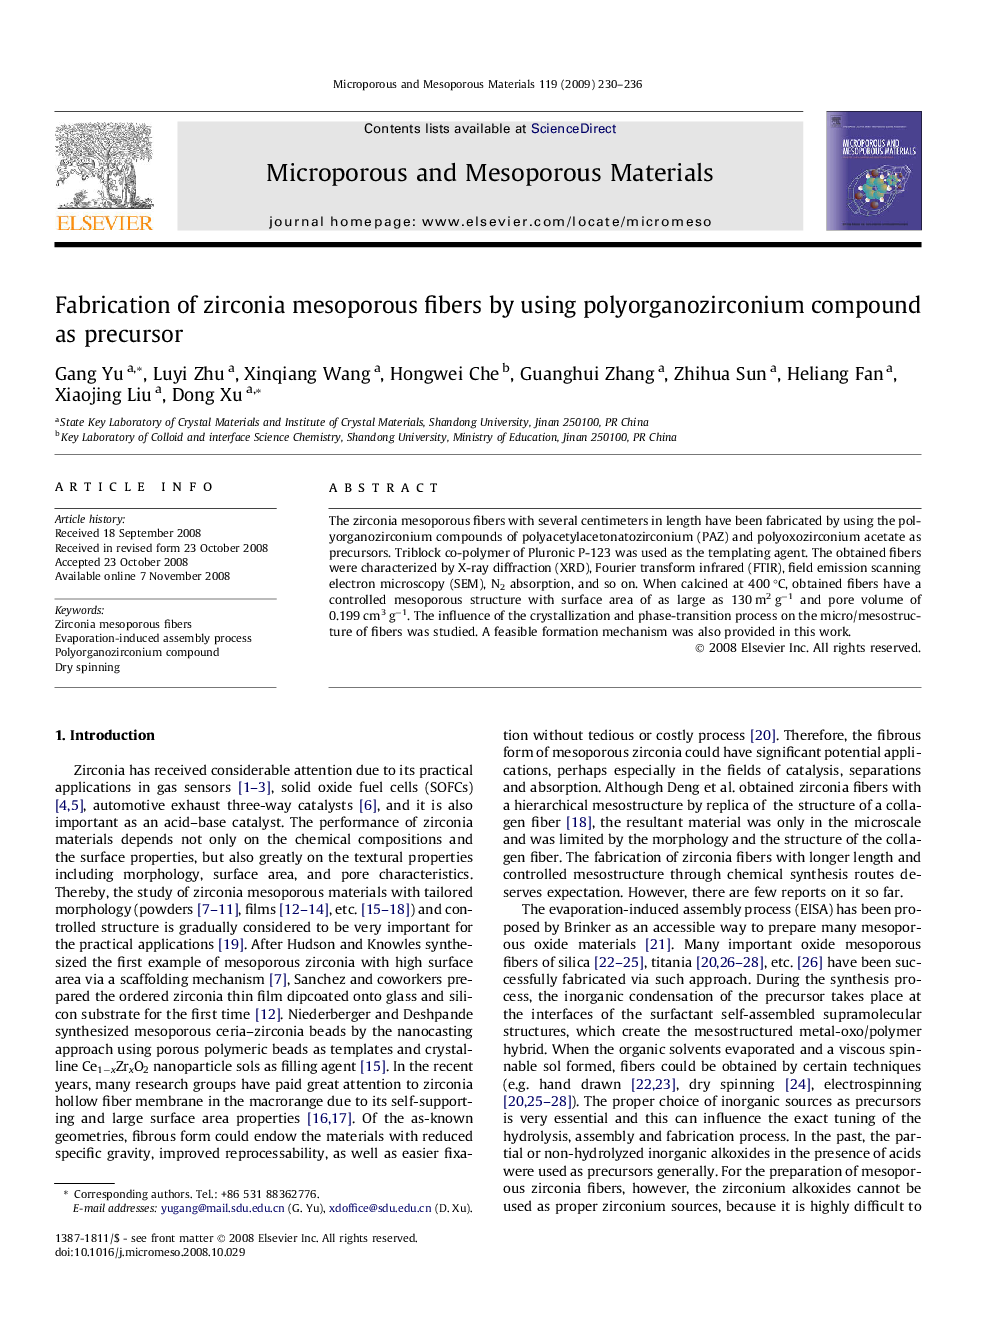 Fabrication of zirconia mesoporous fibers by using polyorganozirconium compound as precursor